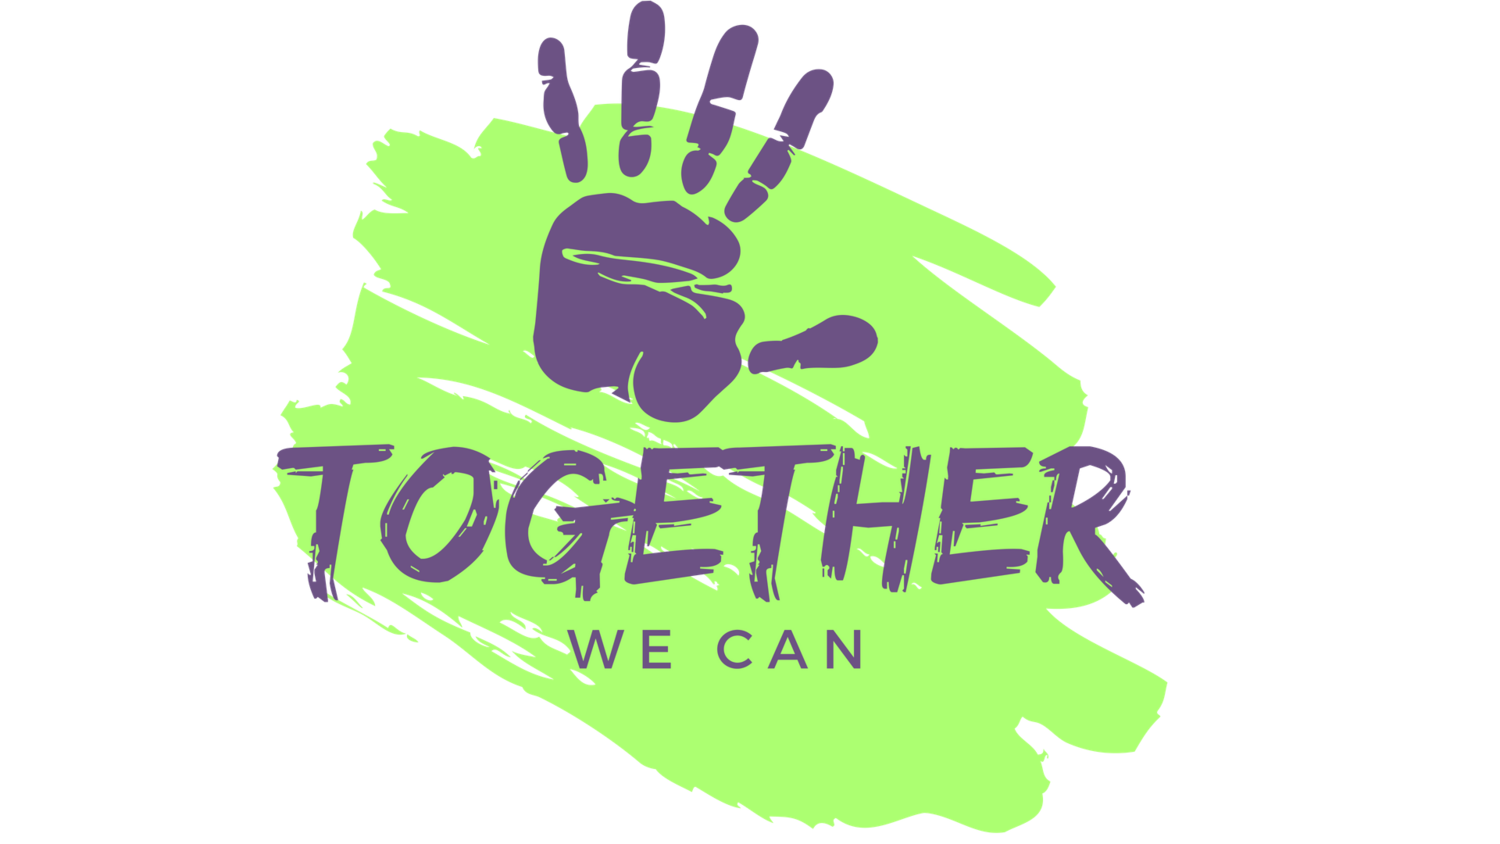 We can group. Success together эмблема. Together we can. We're together. Жизнь март логотип.